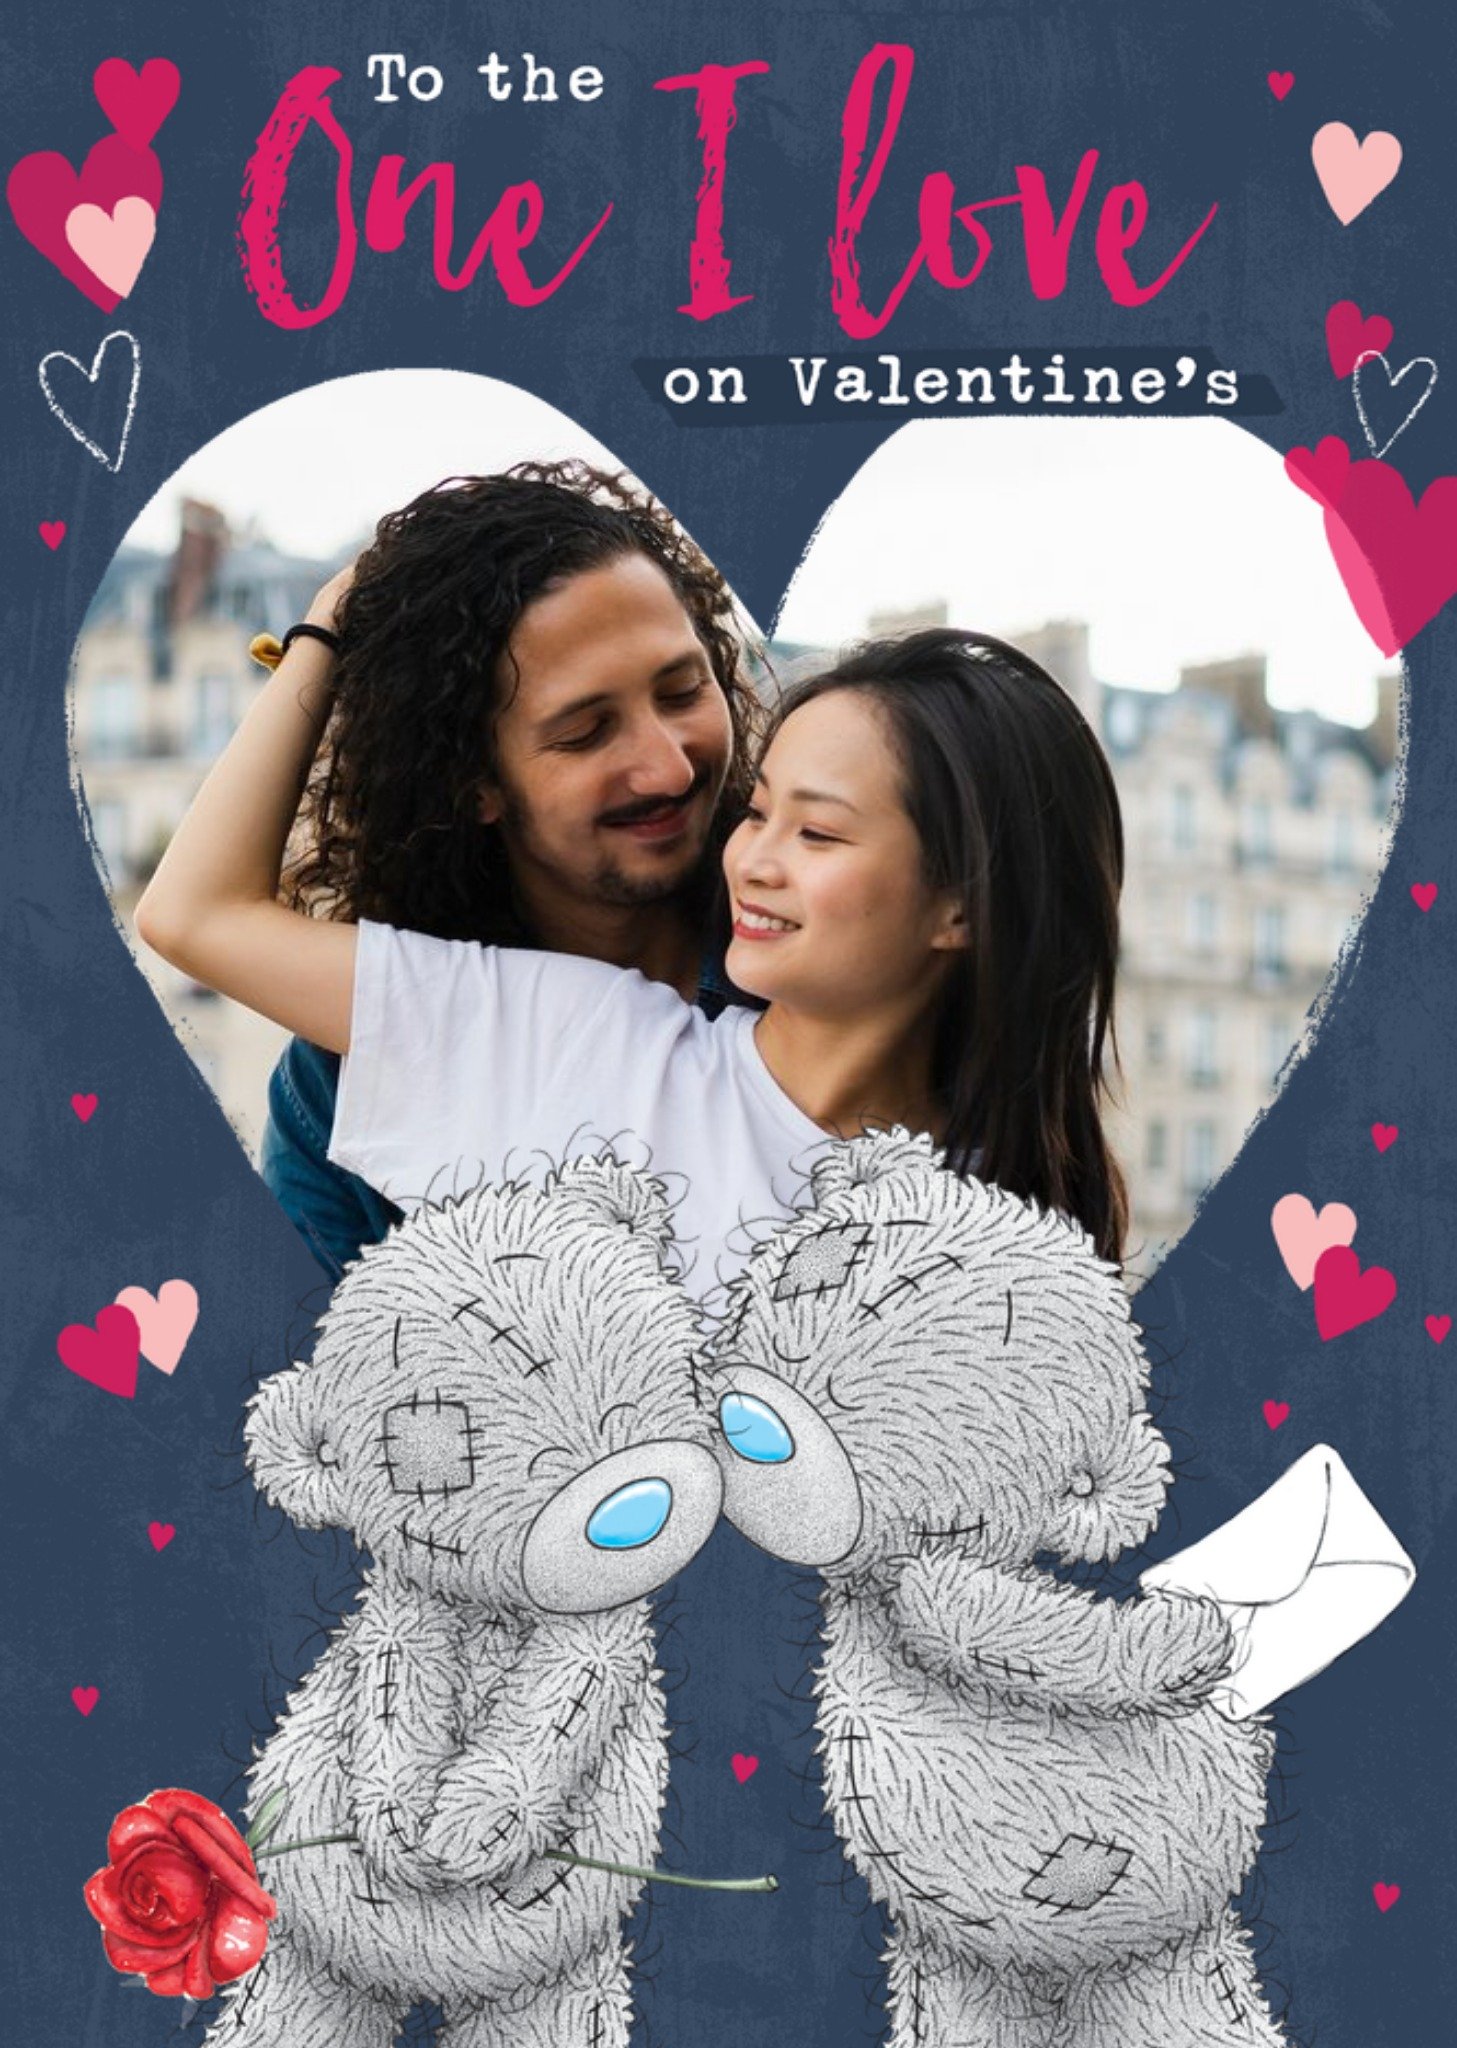 Me To You Tatty Teddy One I Love Heart Photo Upload Valentine's Card Ecard